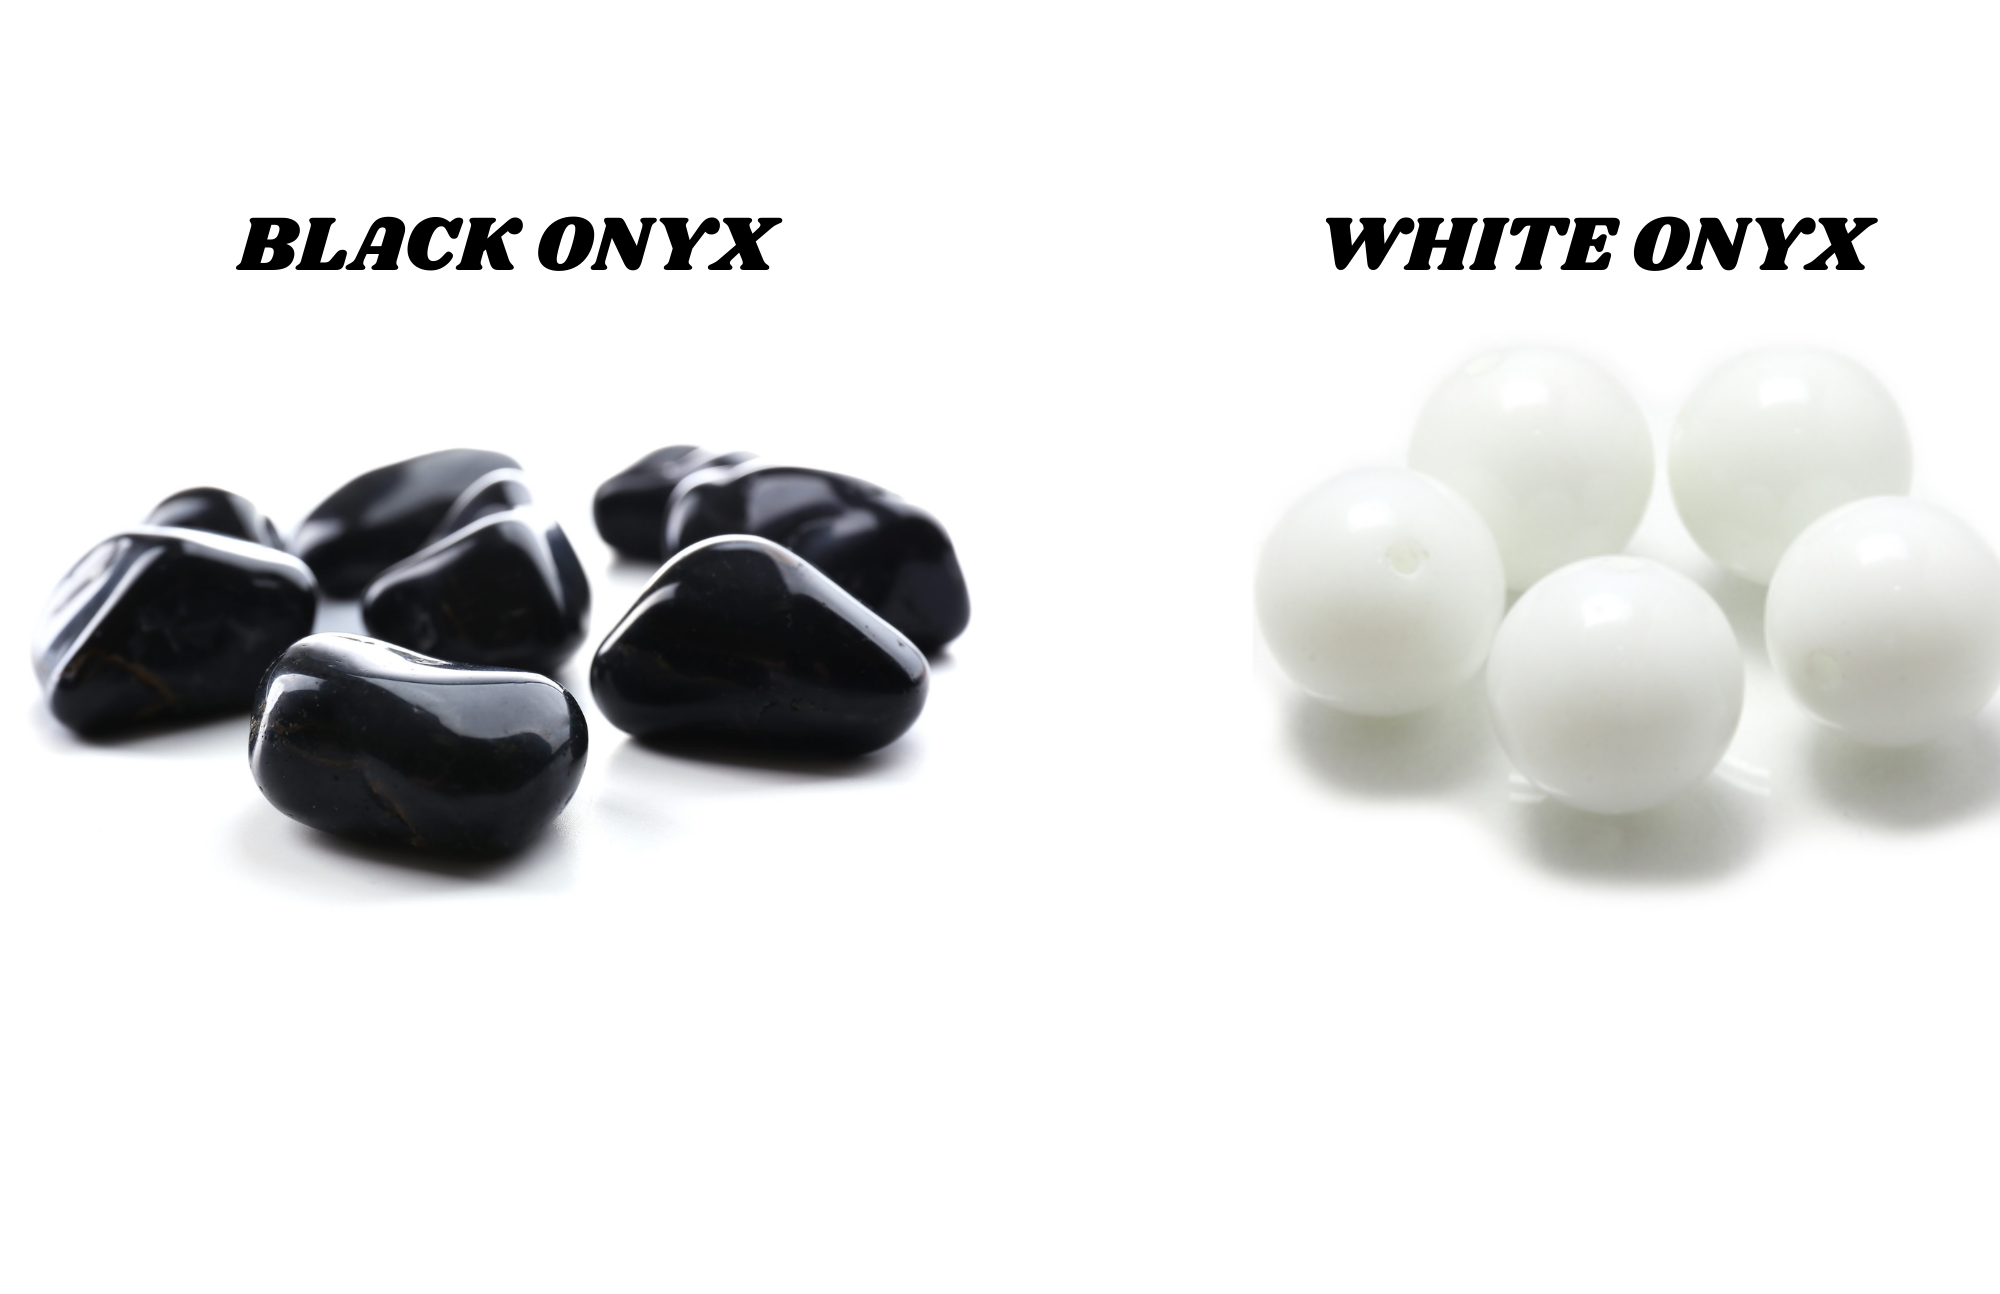 Eight black onyx and five white onyx stones